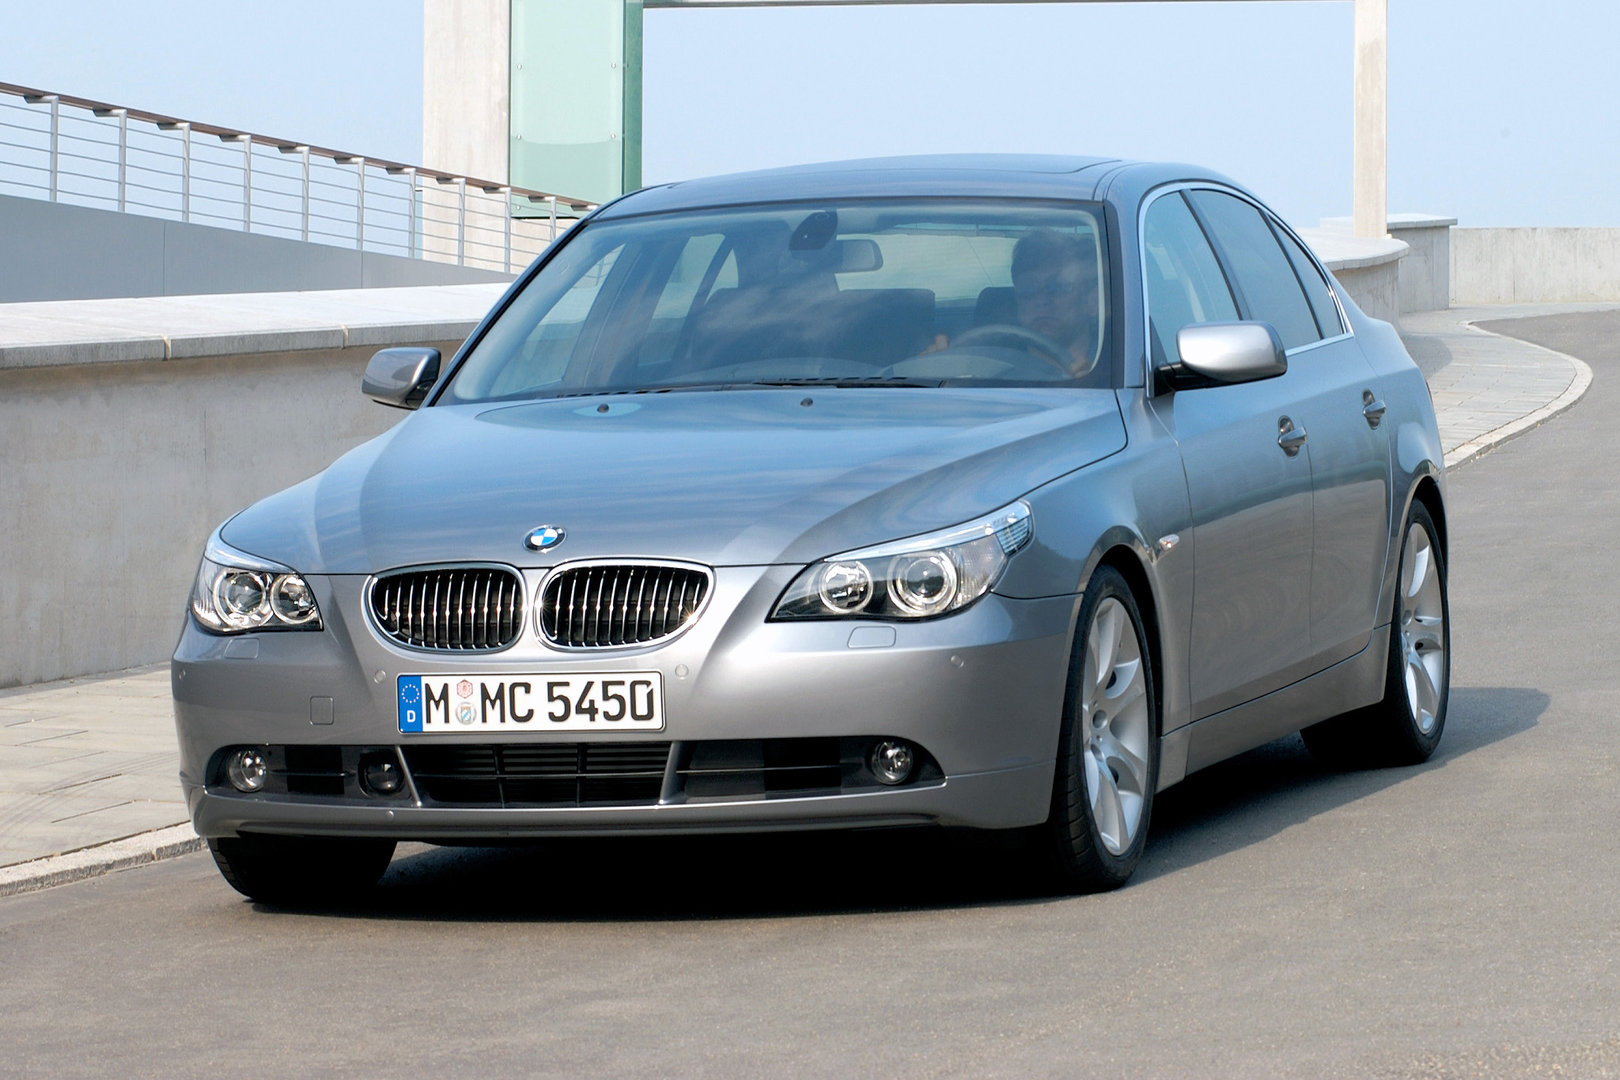 Coche del día: BMW 545i (E60)